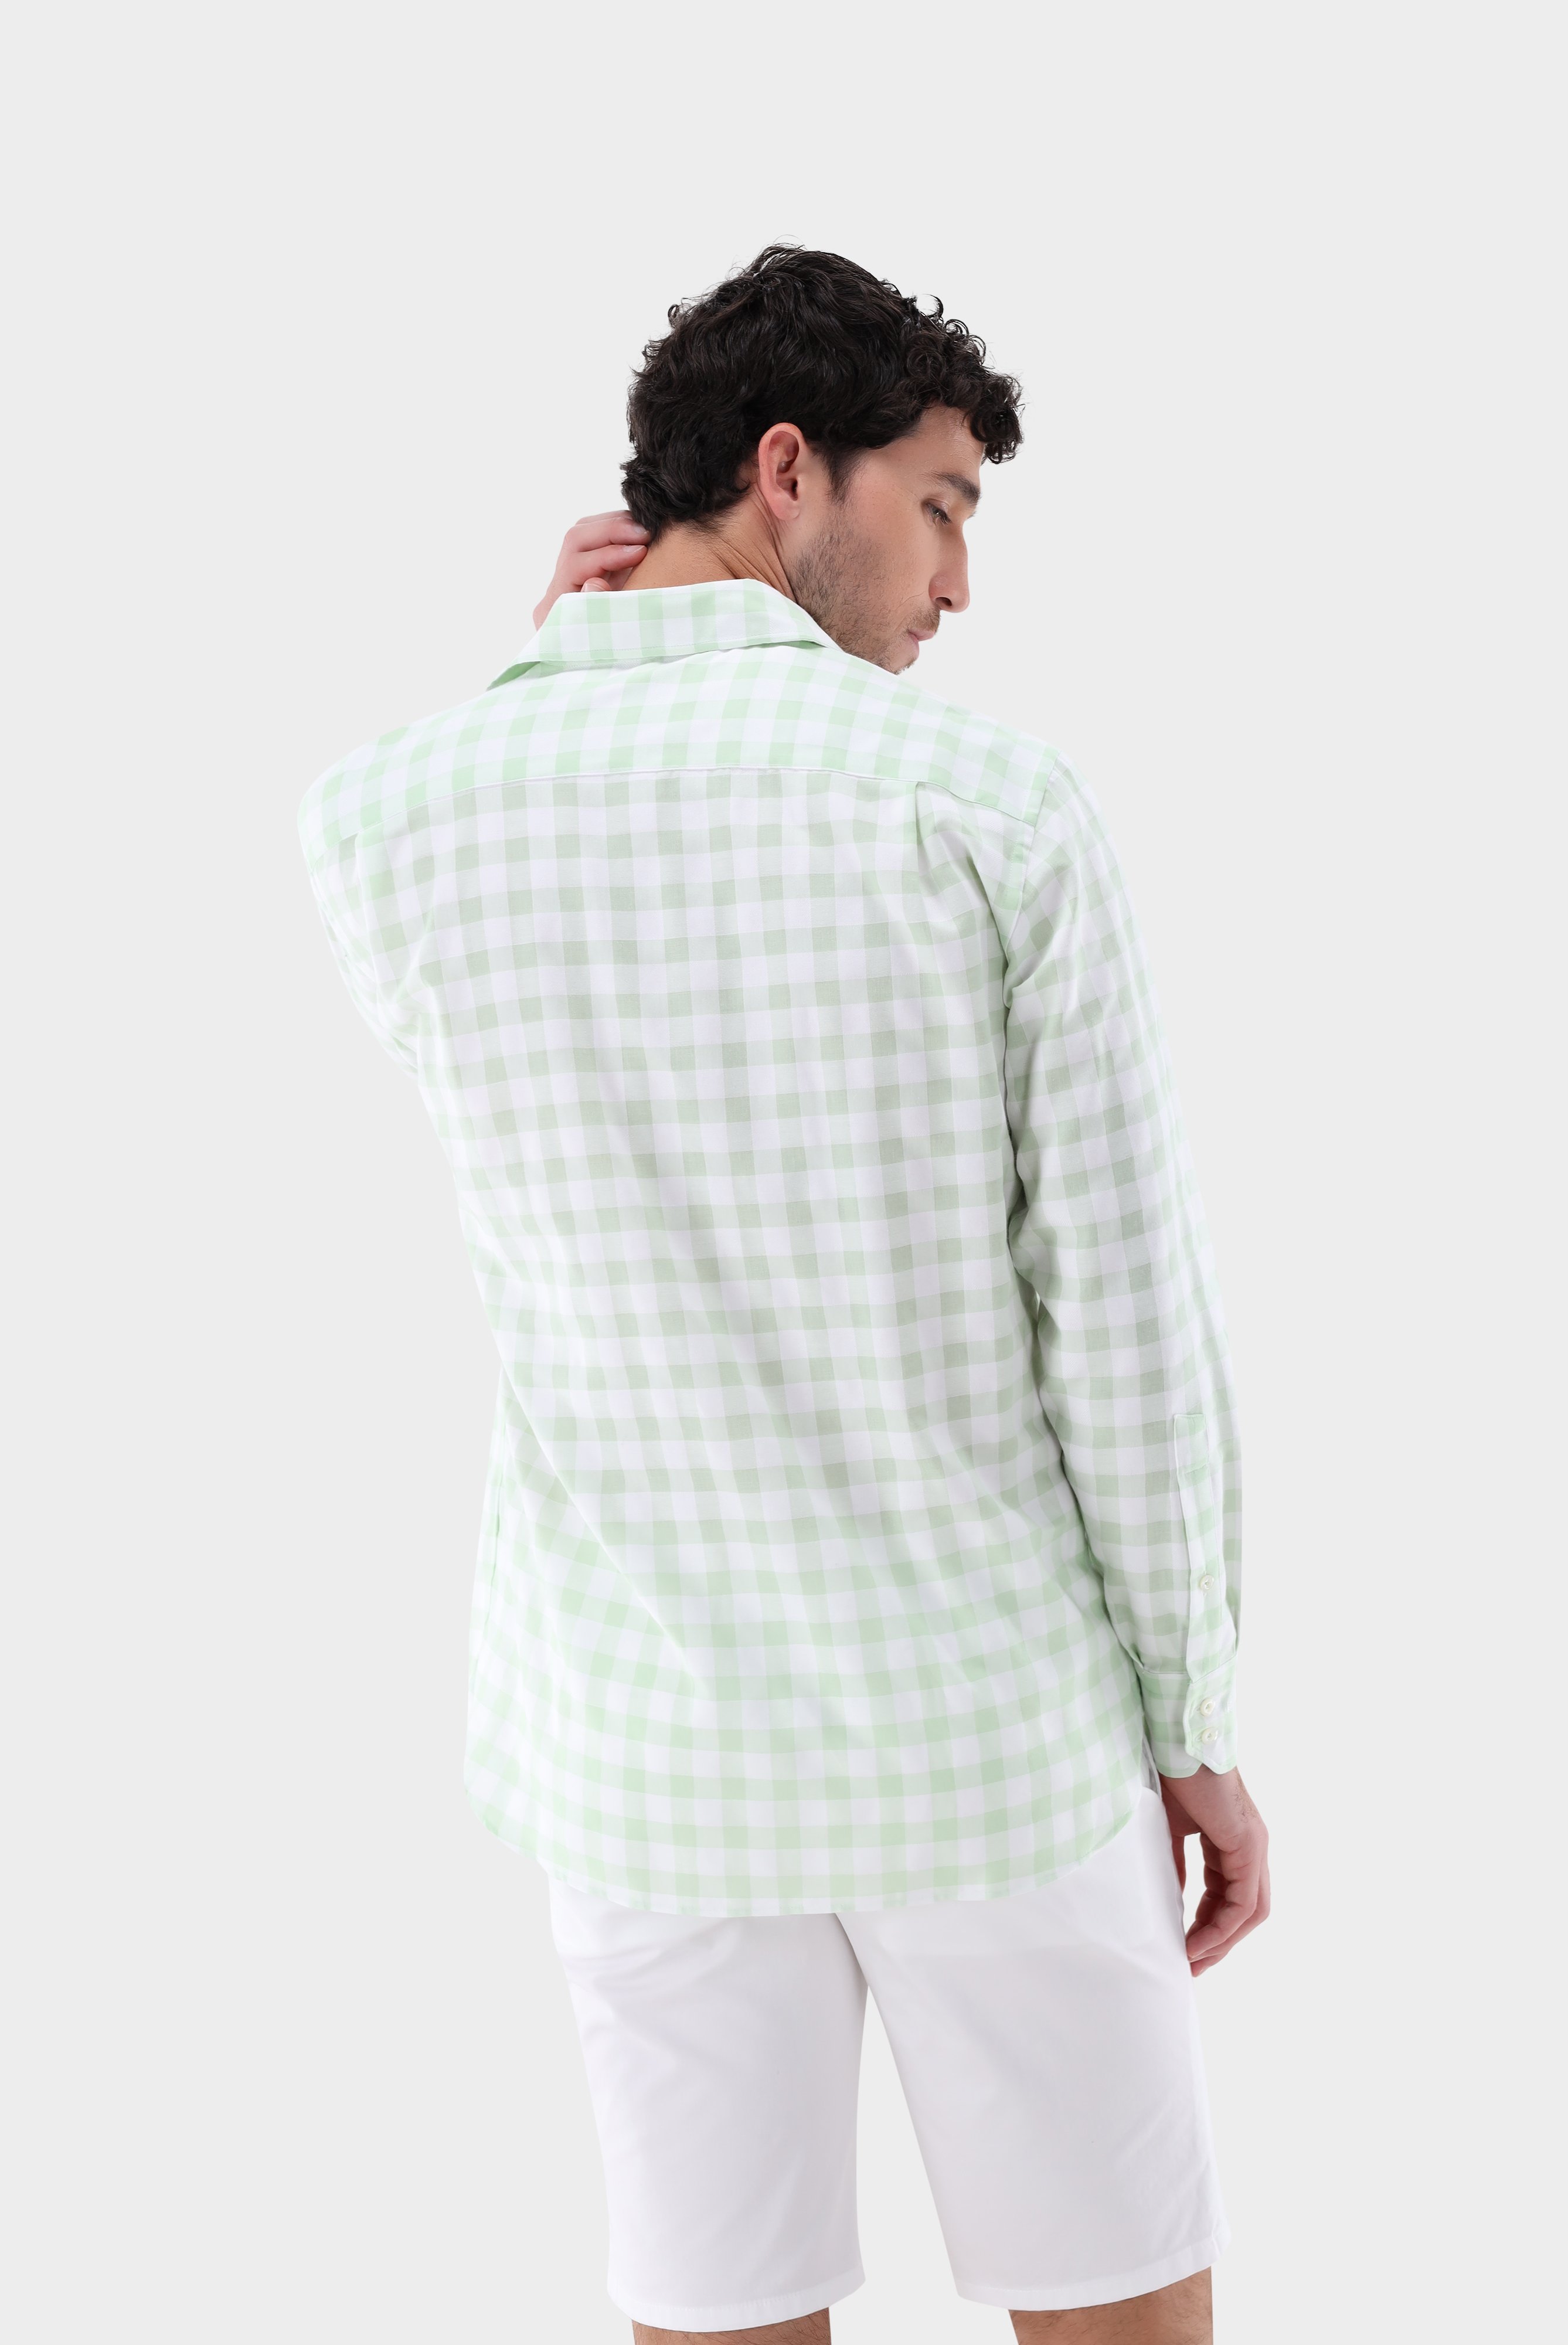 Casual Shirts+Checked twill shirt Comfort Fit+20.2021.AV.151021.910.39